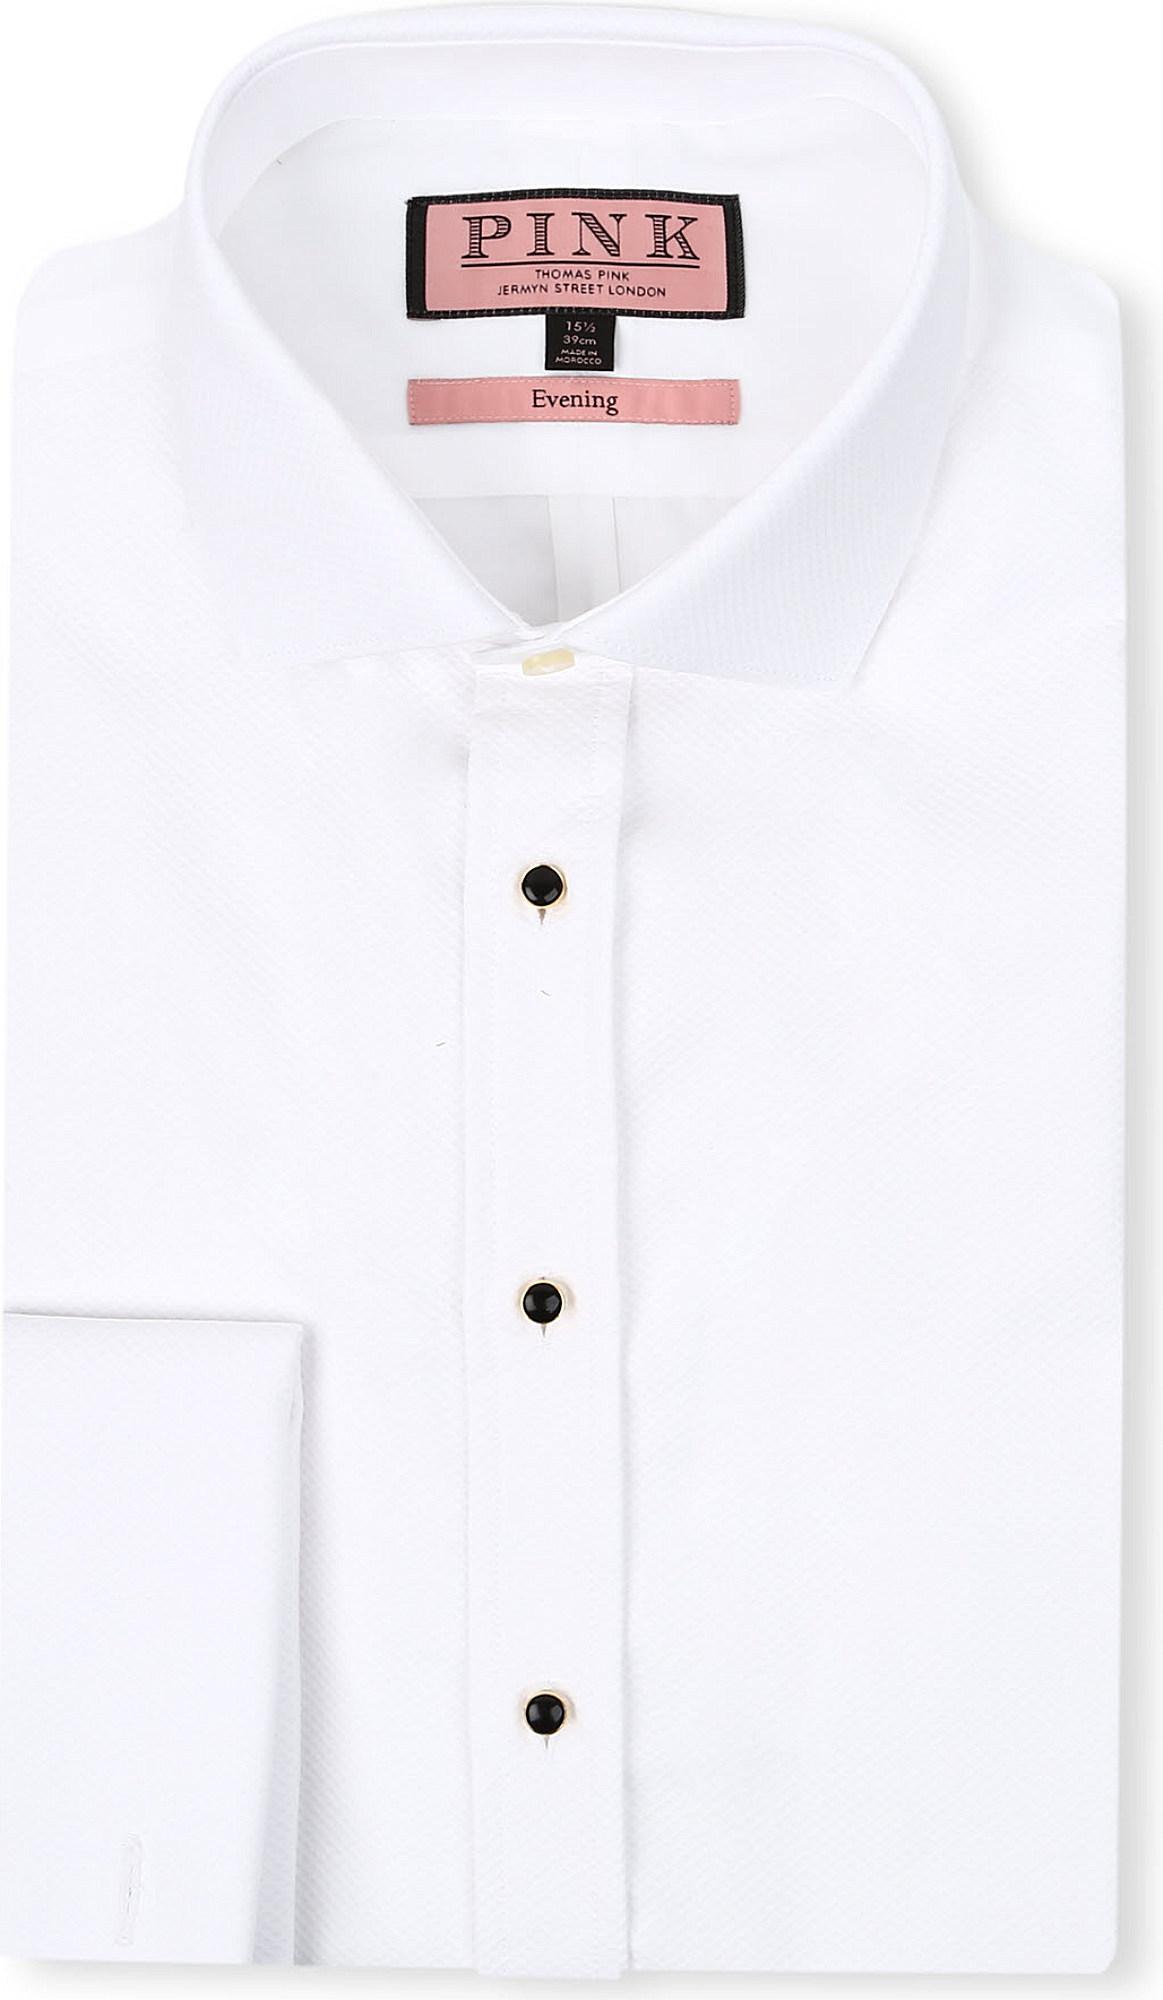 Thomas Pink Slim Fit Tuxedo Shirt in White for Men